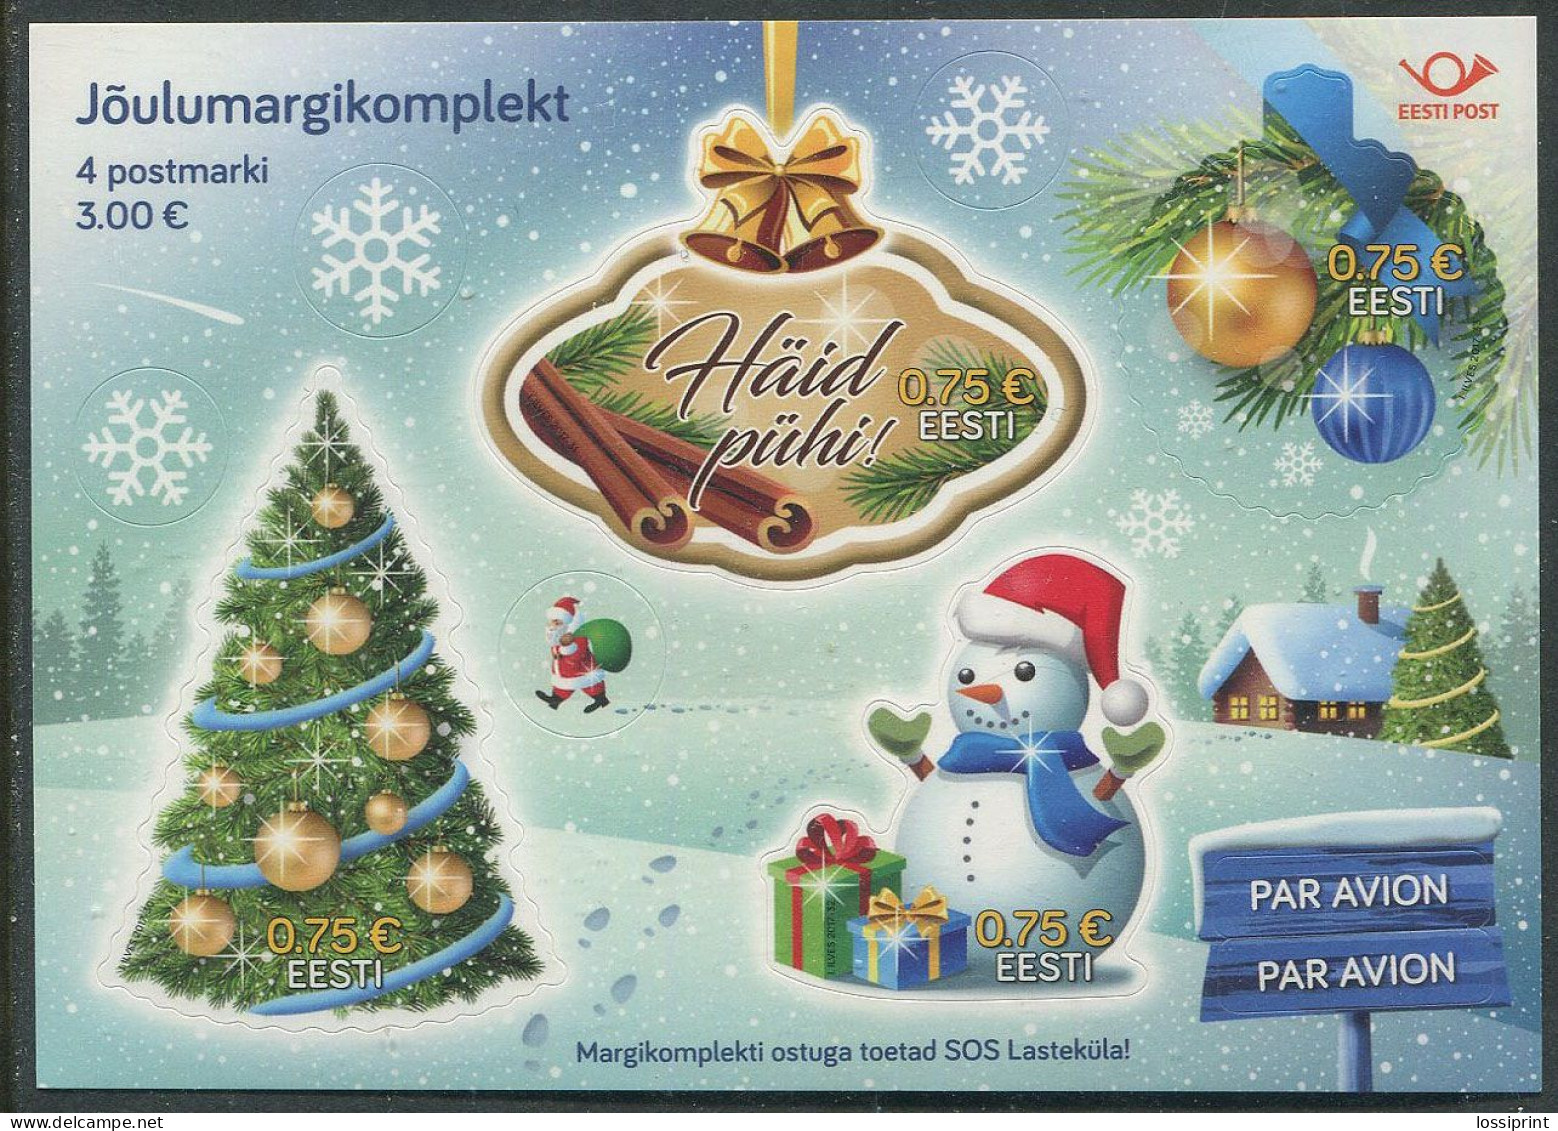 Estonia:Unused Block Christmas Stamps Set, 2017, MNH - Estonie